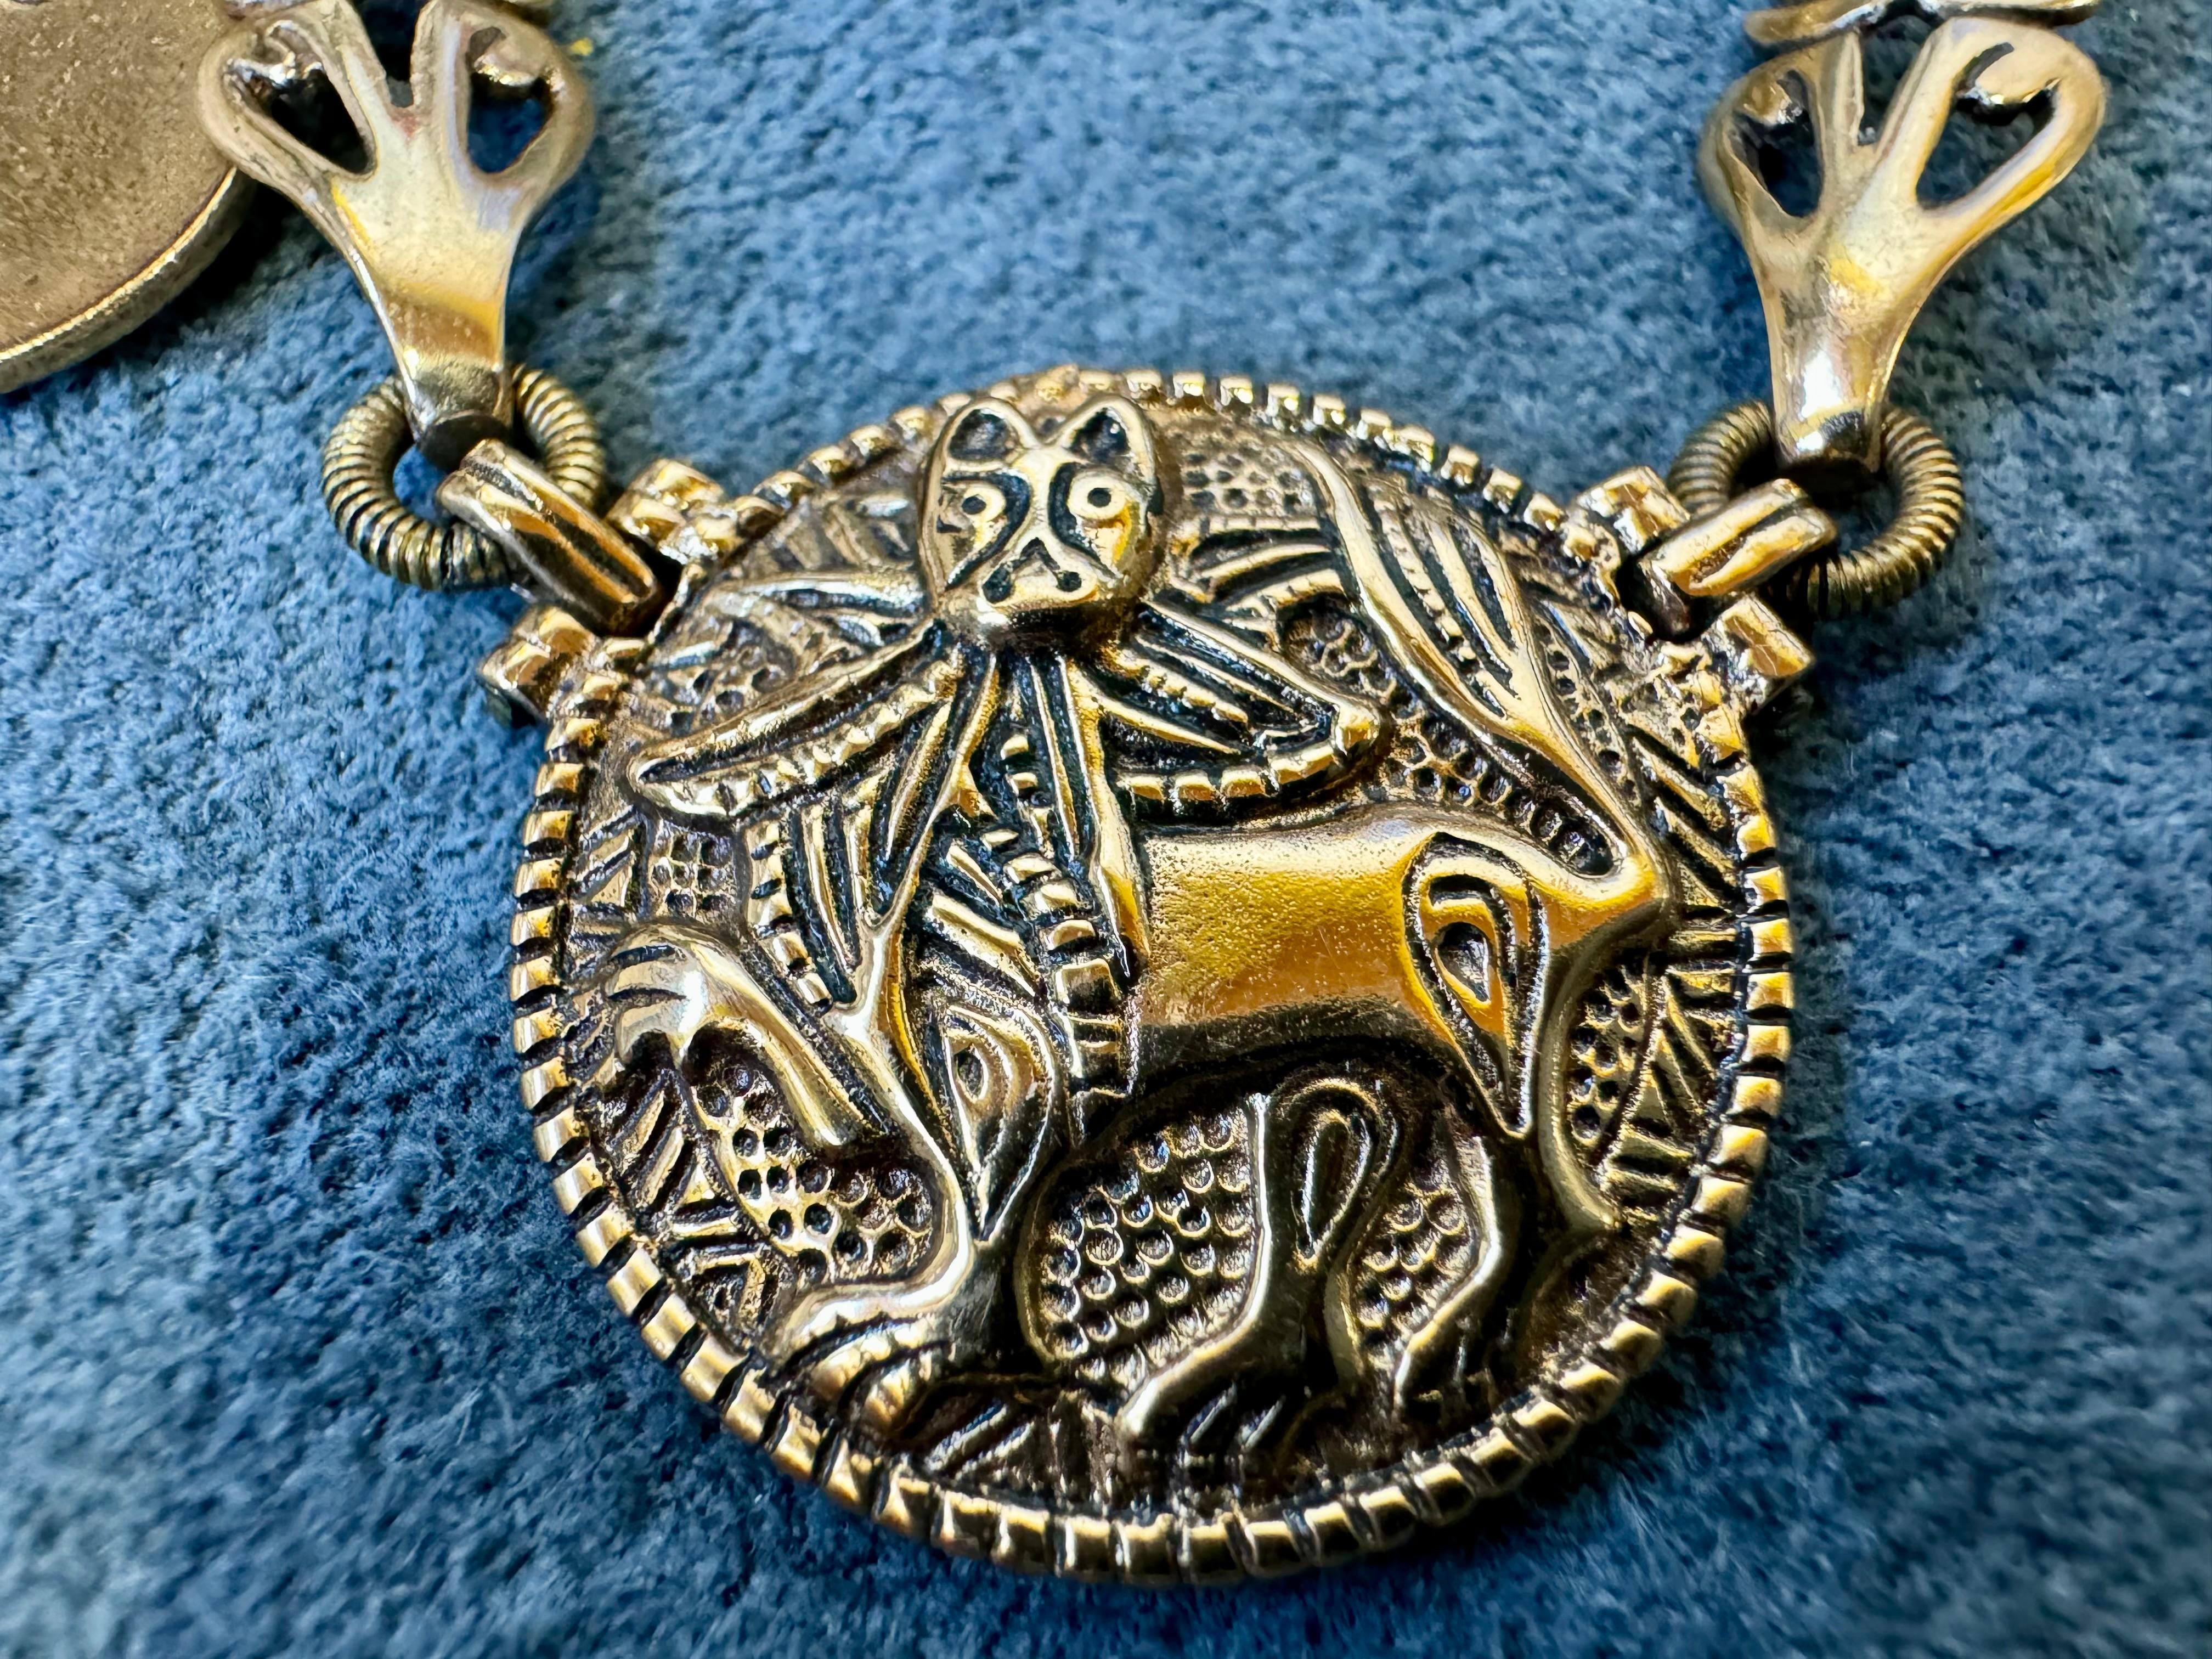 New unused jewelry set.

Kalevala Koru Finland
Necklace
A bracelet
Earrings

Kalevala Jewelry Sun Lion Necklace, Bracelet and Earrings.
Necklace 44cm Bracelet 18.5cm bronze
The jewel's lion, whose mane spreads like the rays of the sun, has its